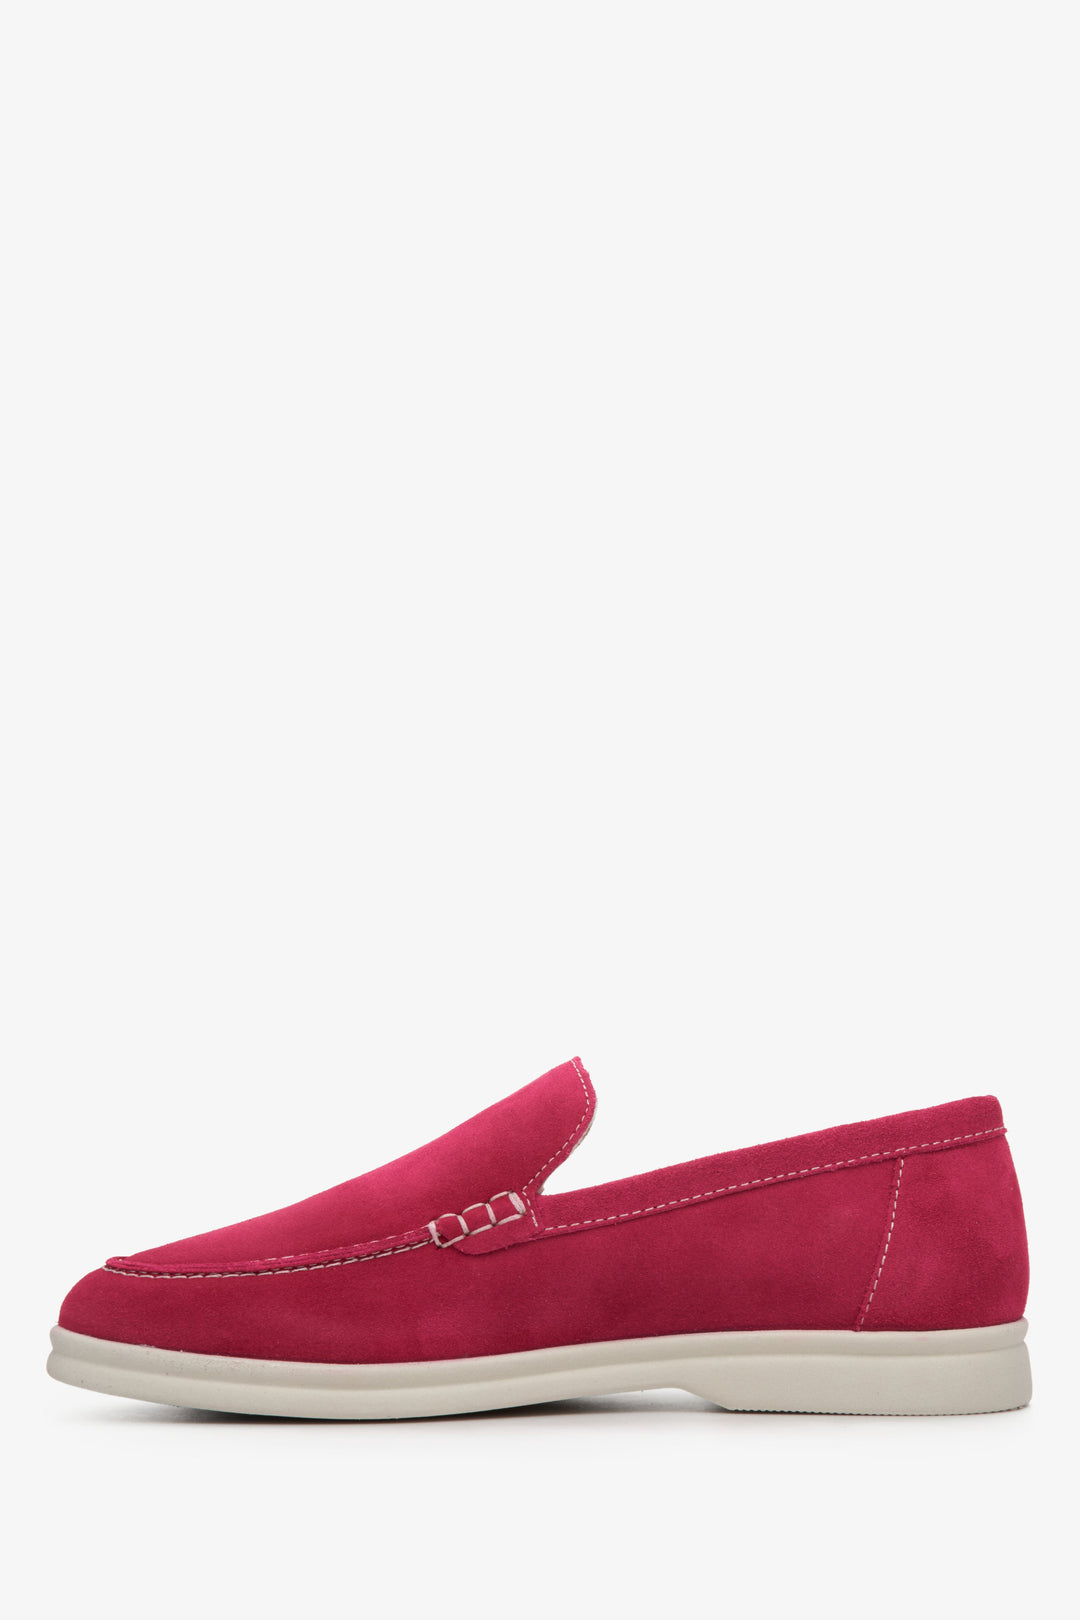 Estro pink suede moccasins for women - shoe profile.